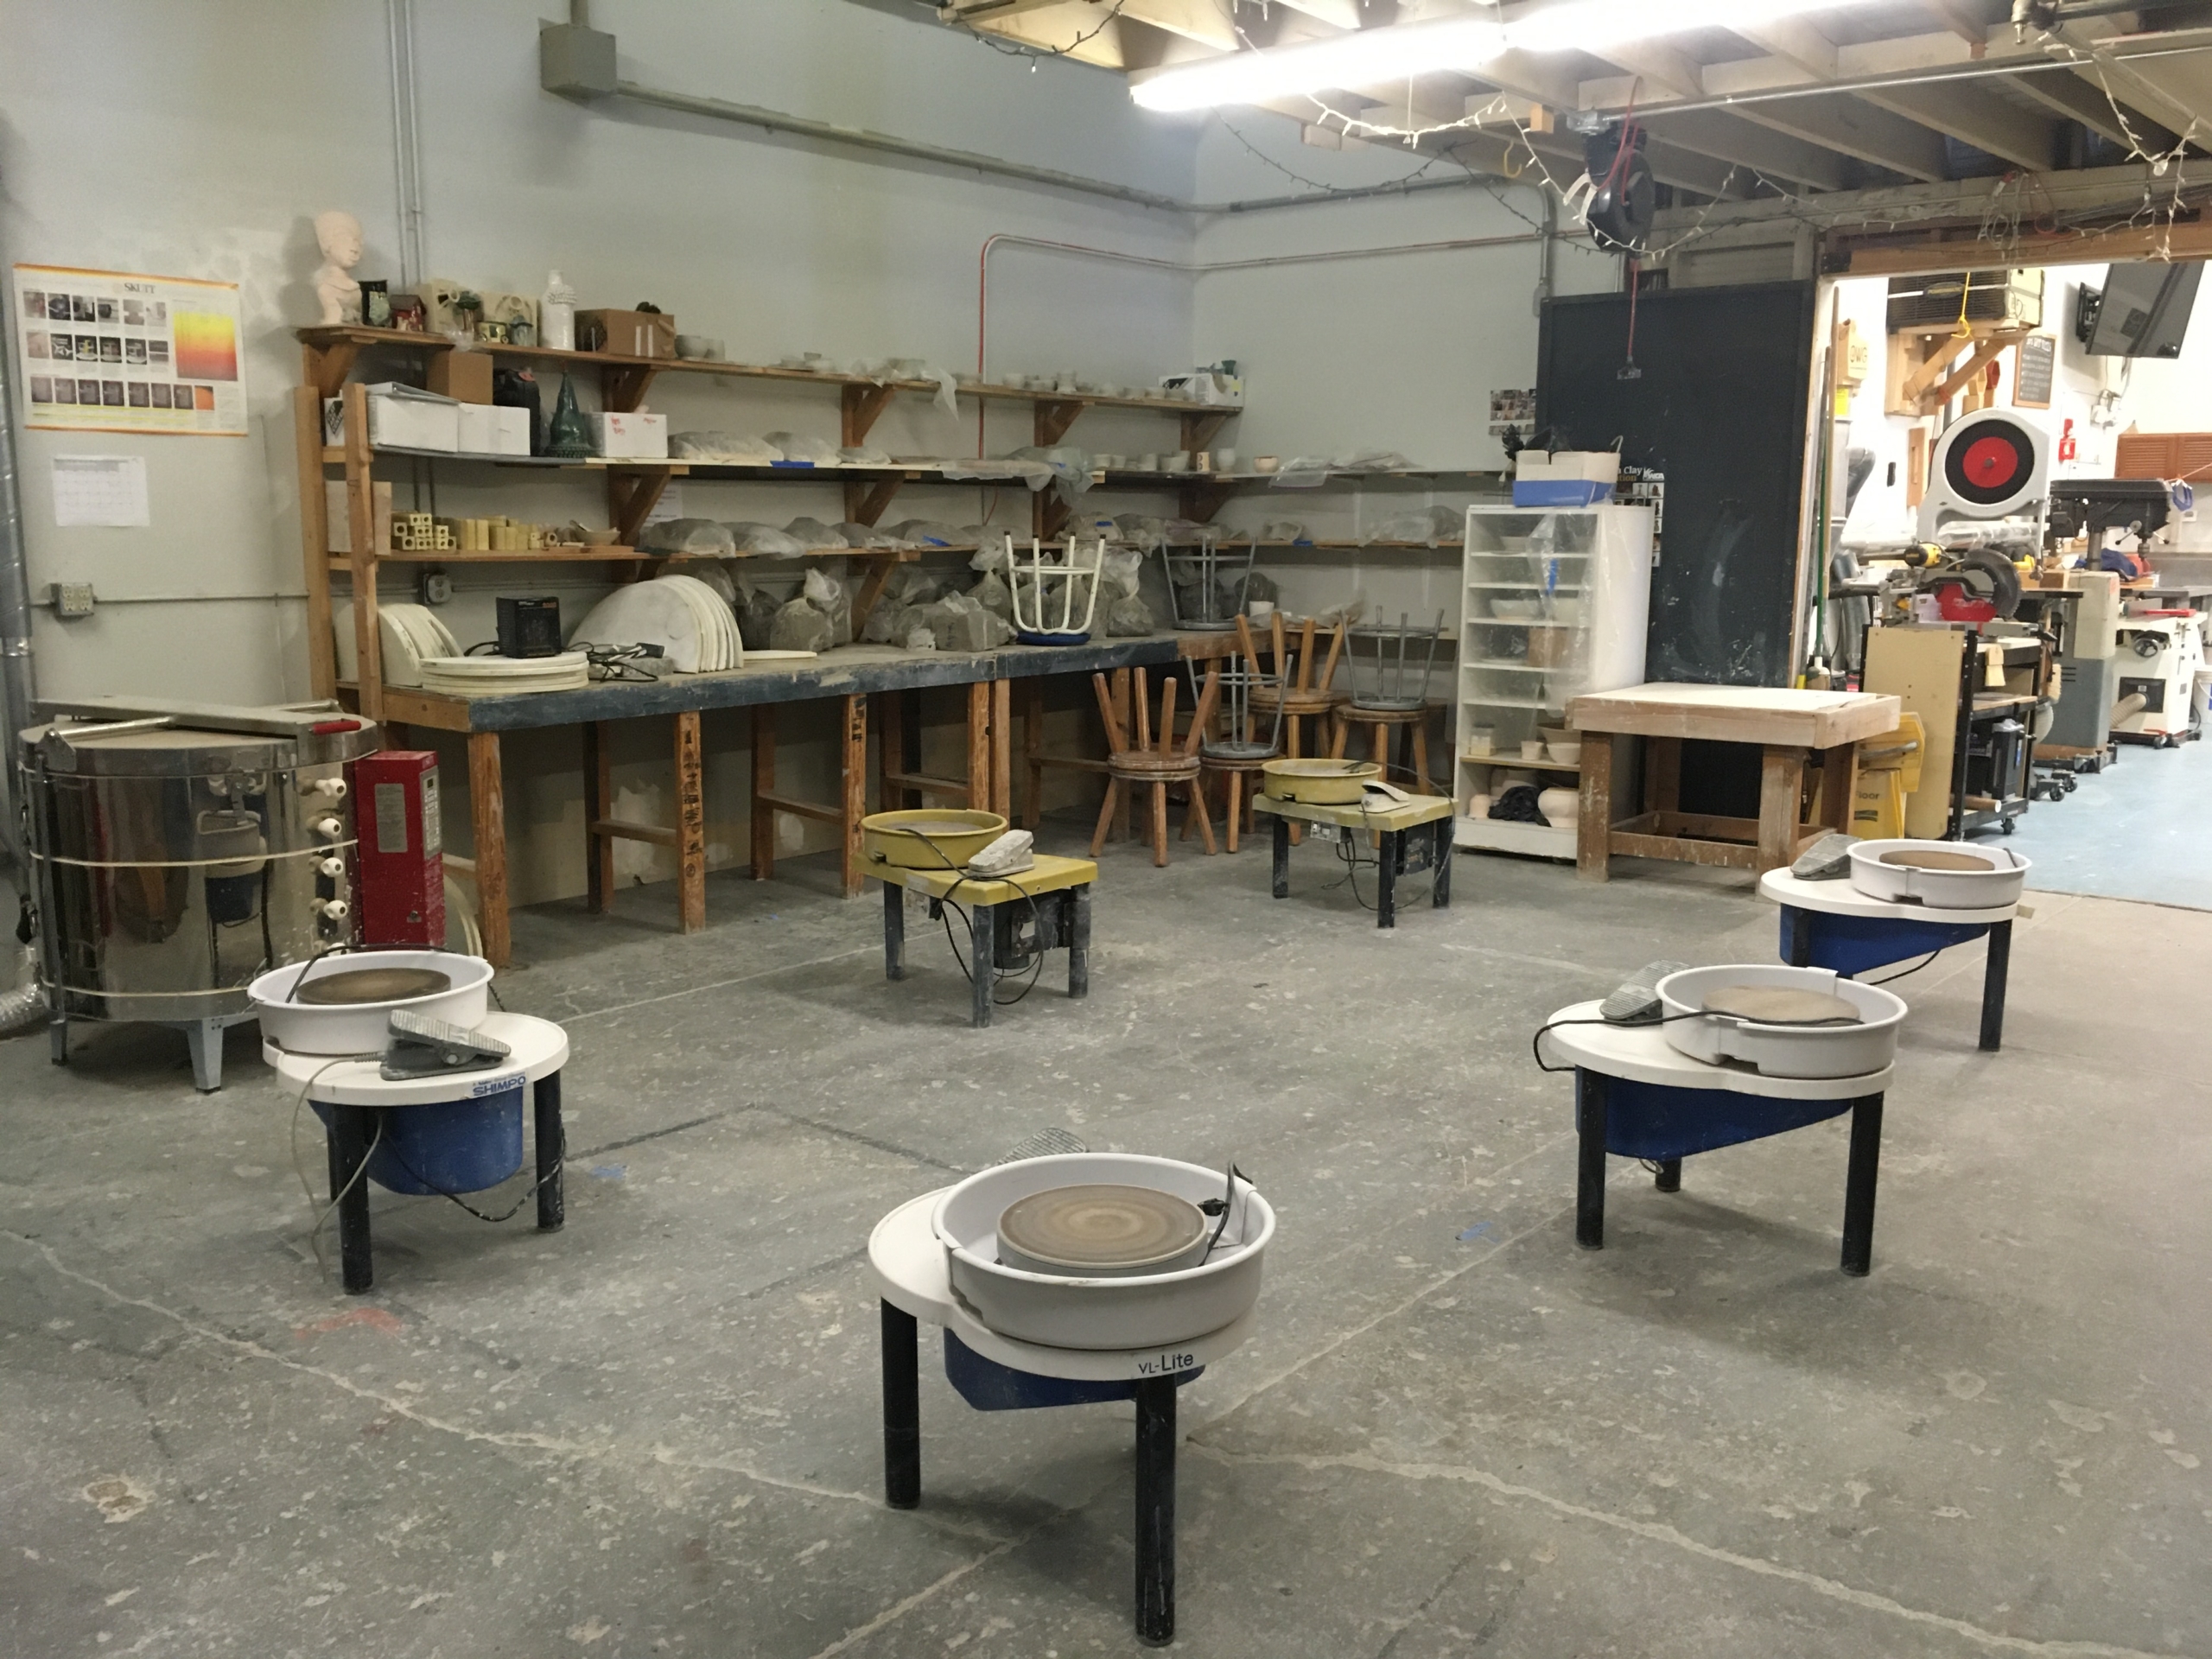 Ceramic Studio/Classroom  Stokes County Arts Council